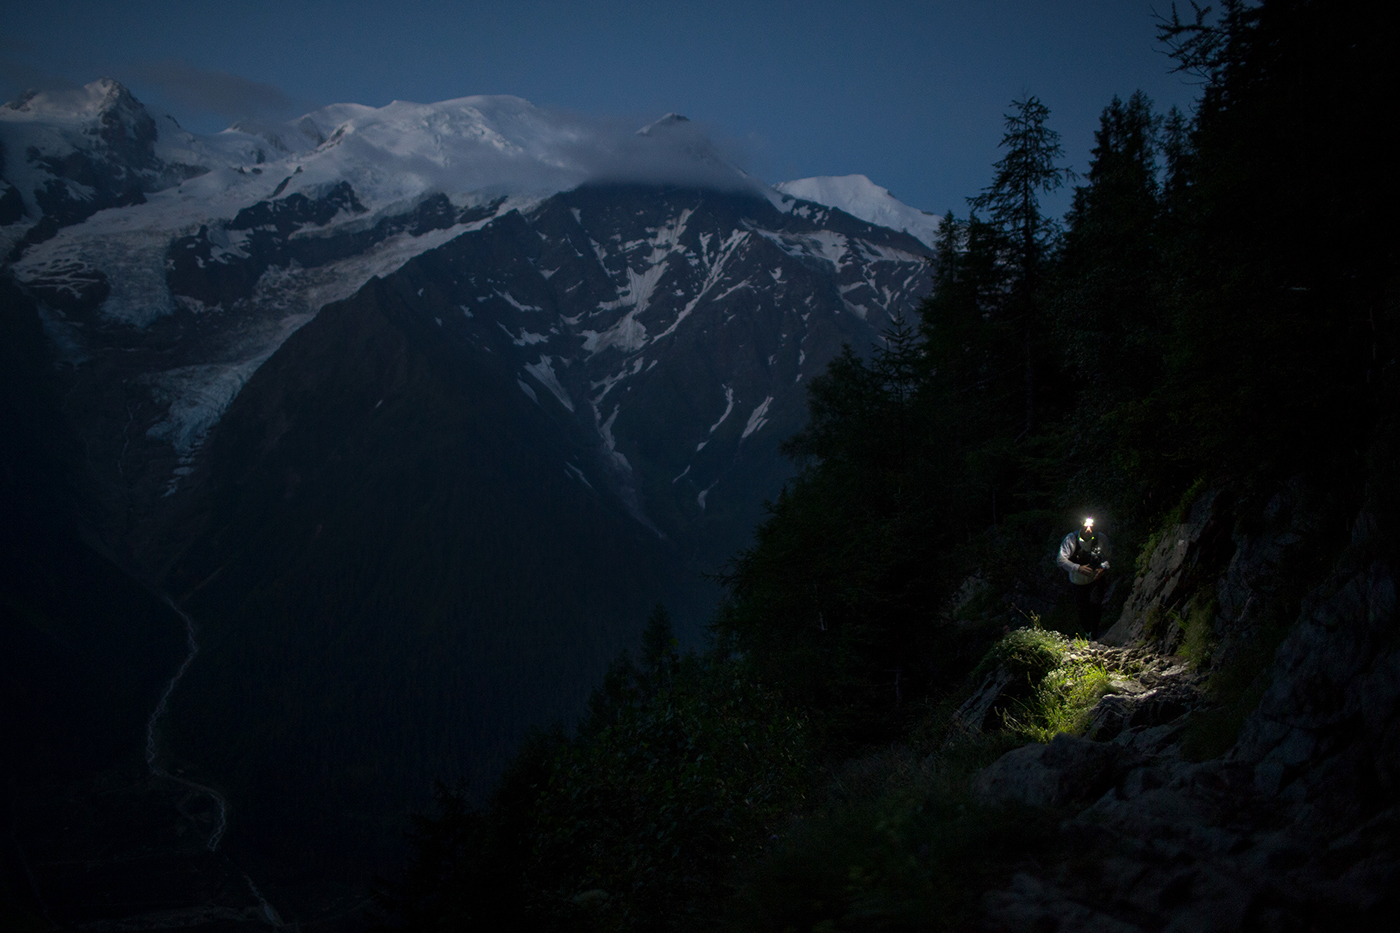 lighting geonaute decathlon chamonix onnight trekking running headlamp night light